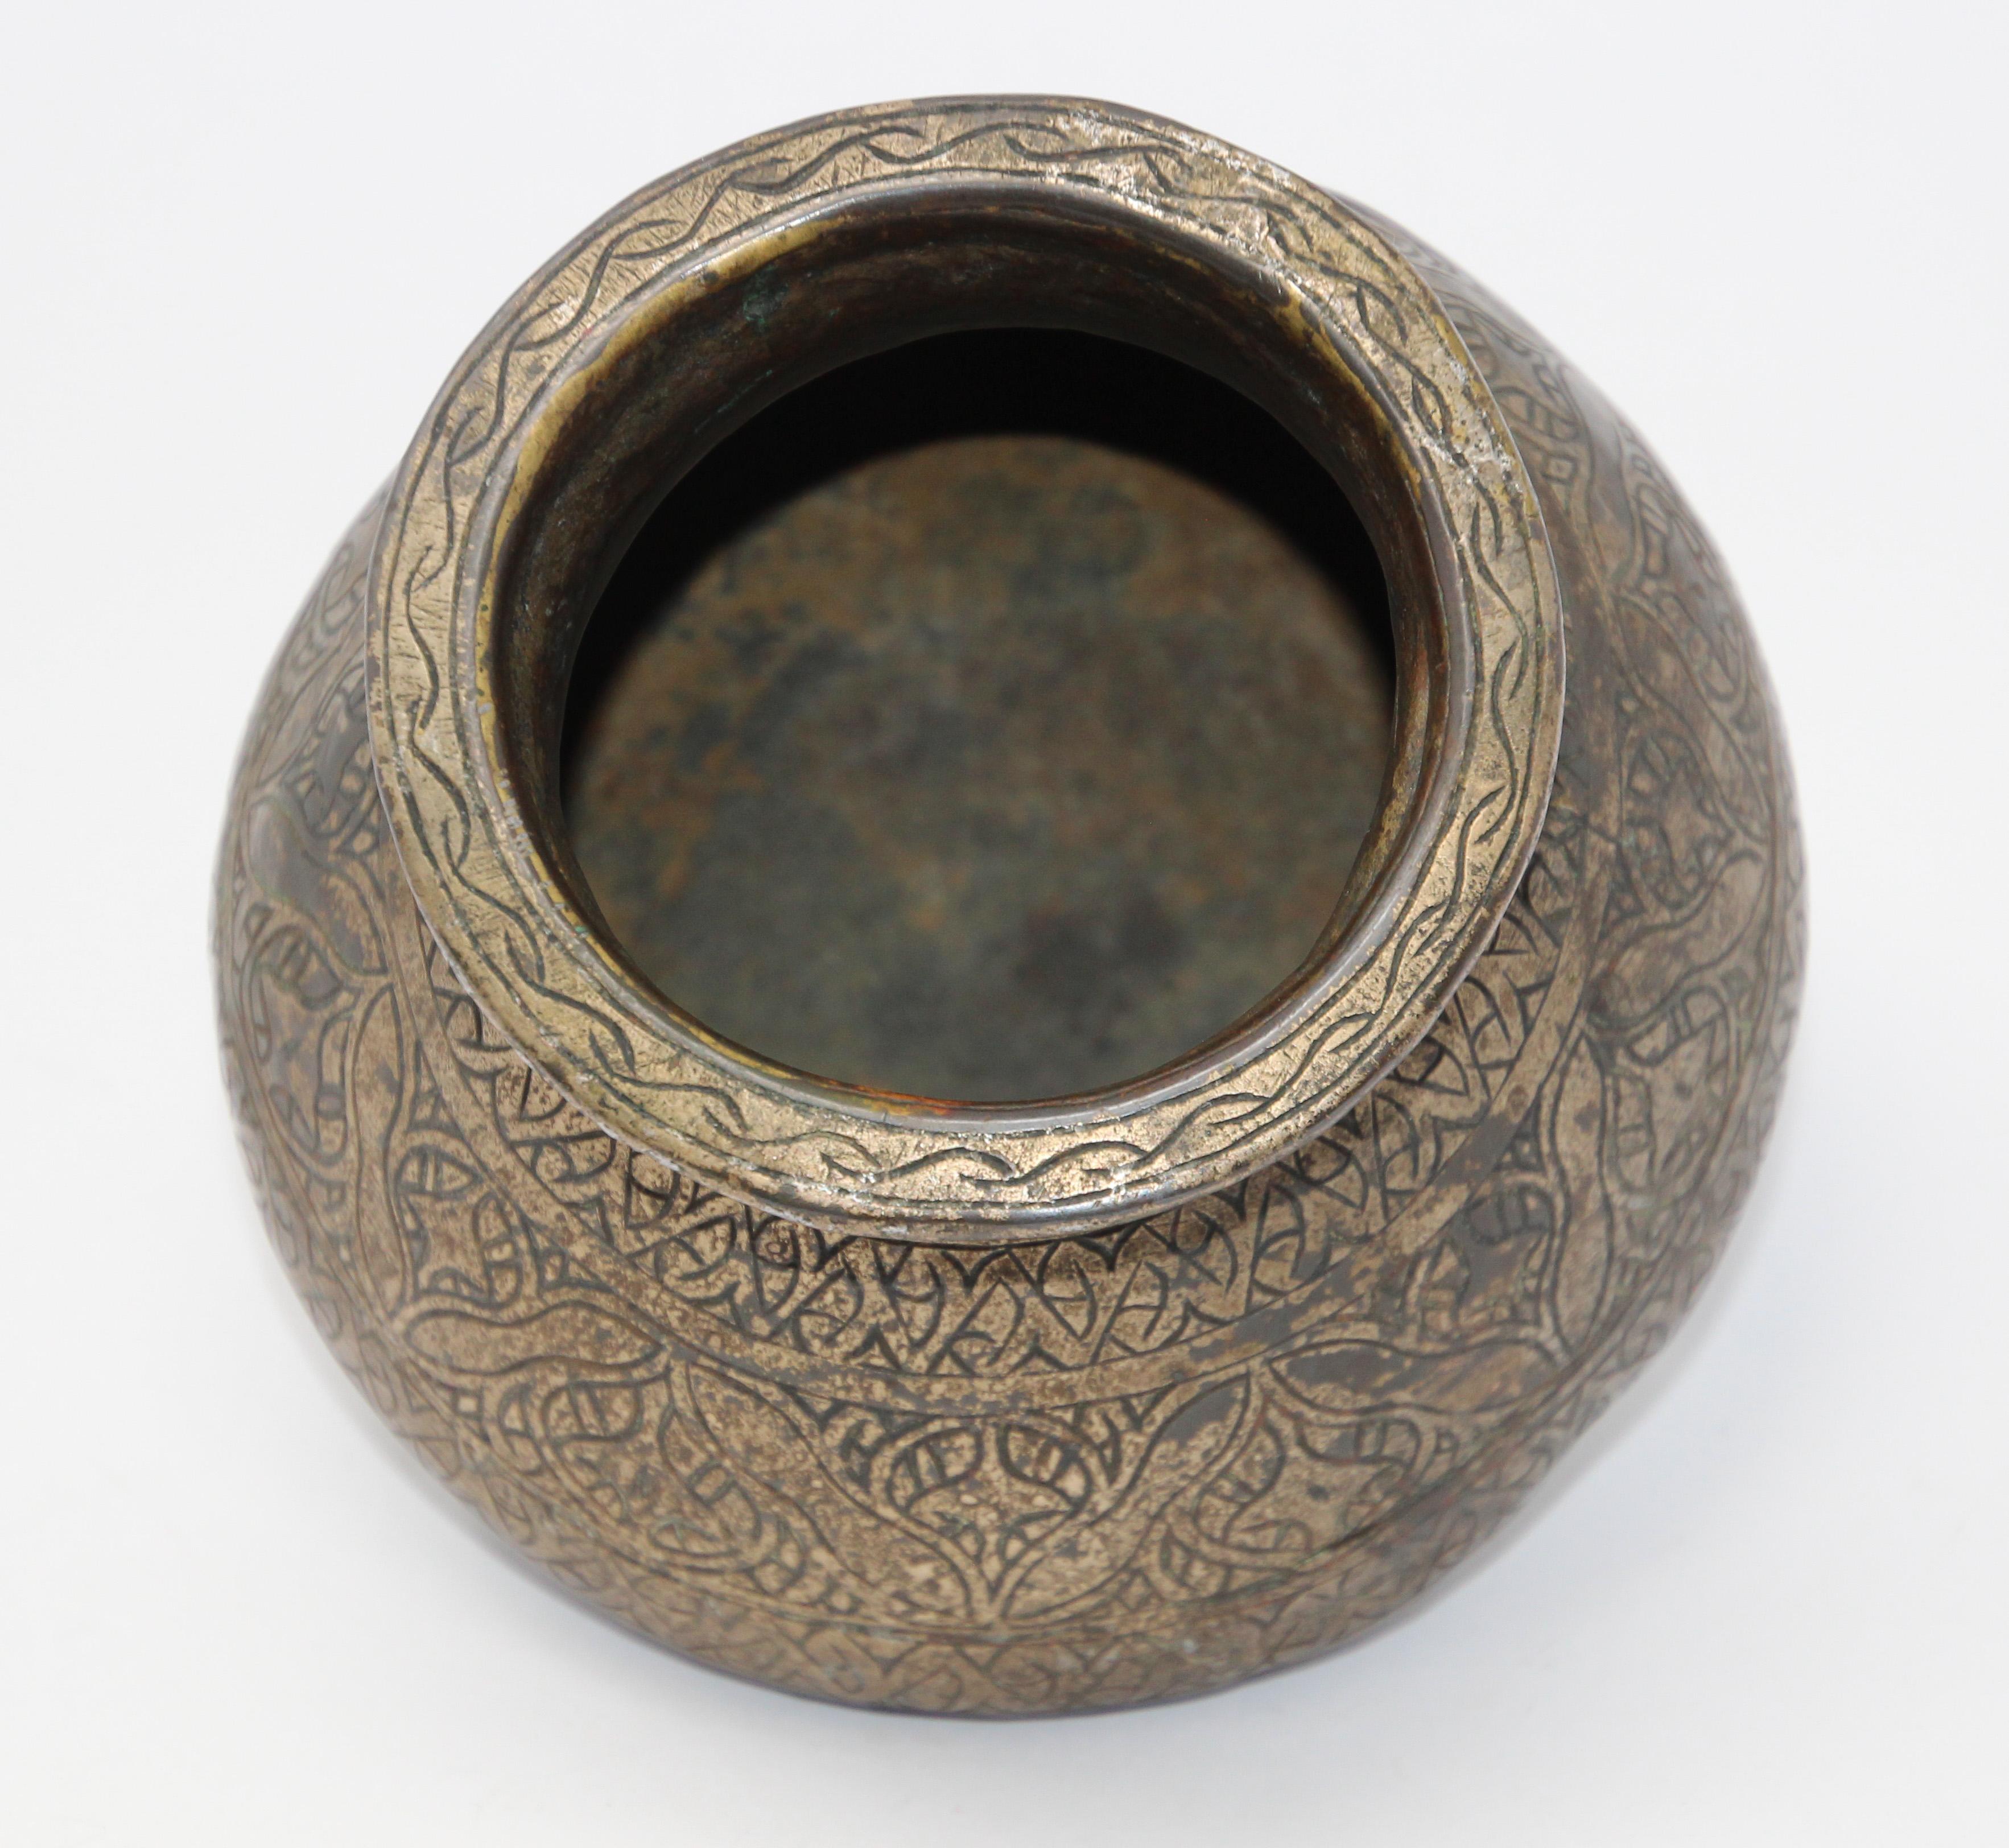 Antique Hand-Hammered Bronze Ceremonial Pot 